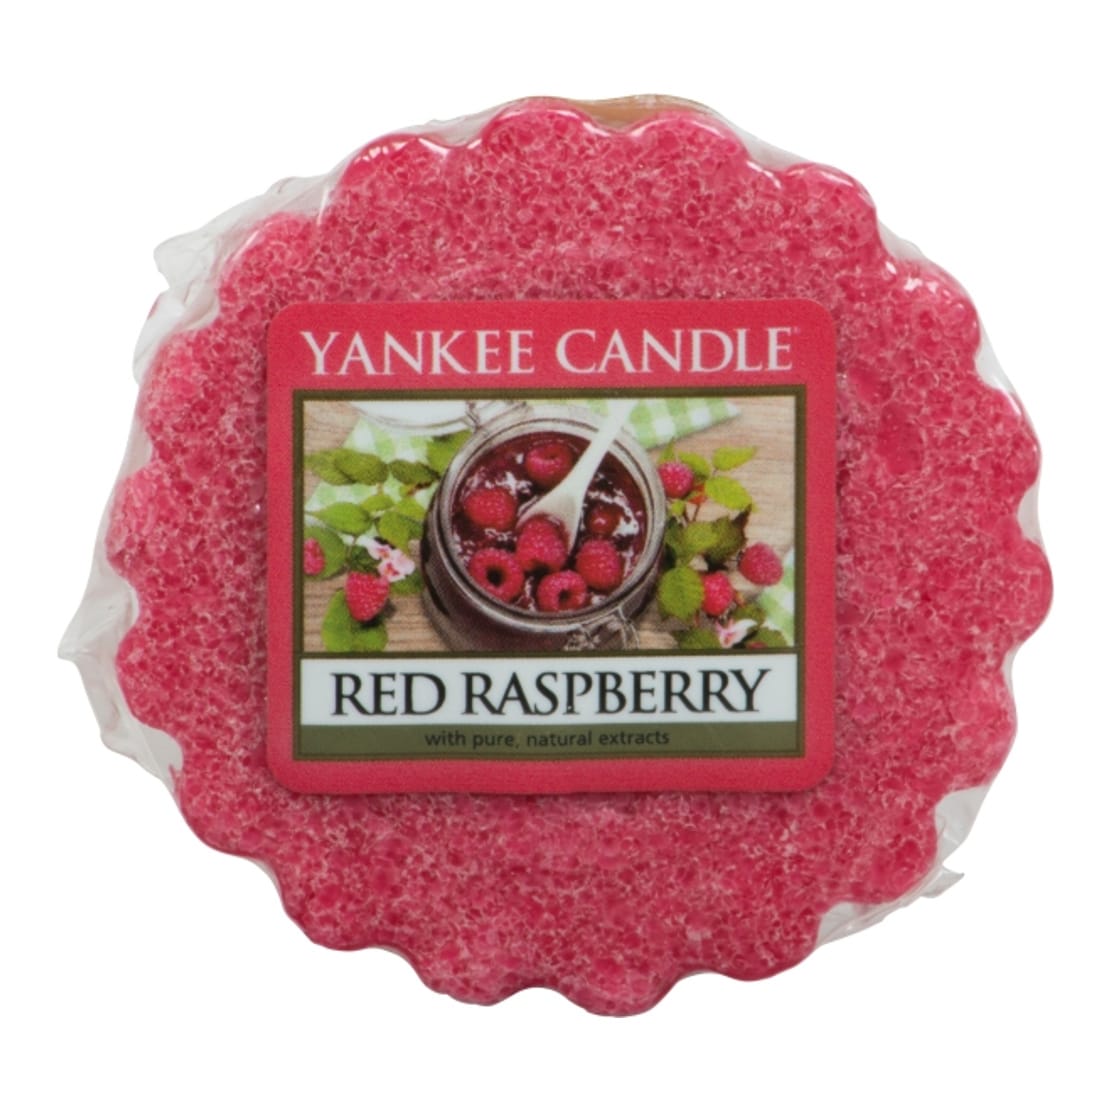 Yankee Candle Red Raspberry Wax Melt Tart